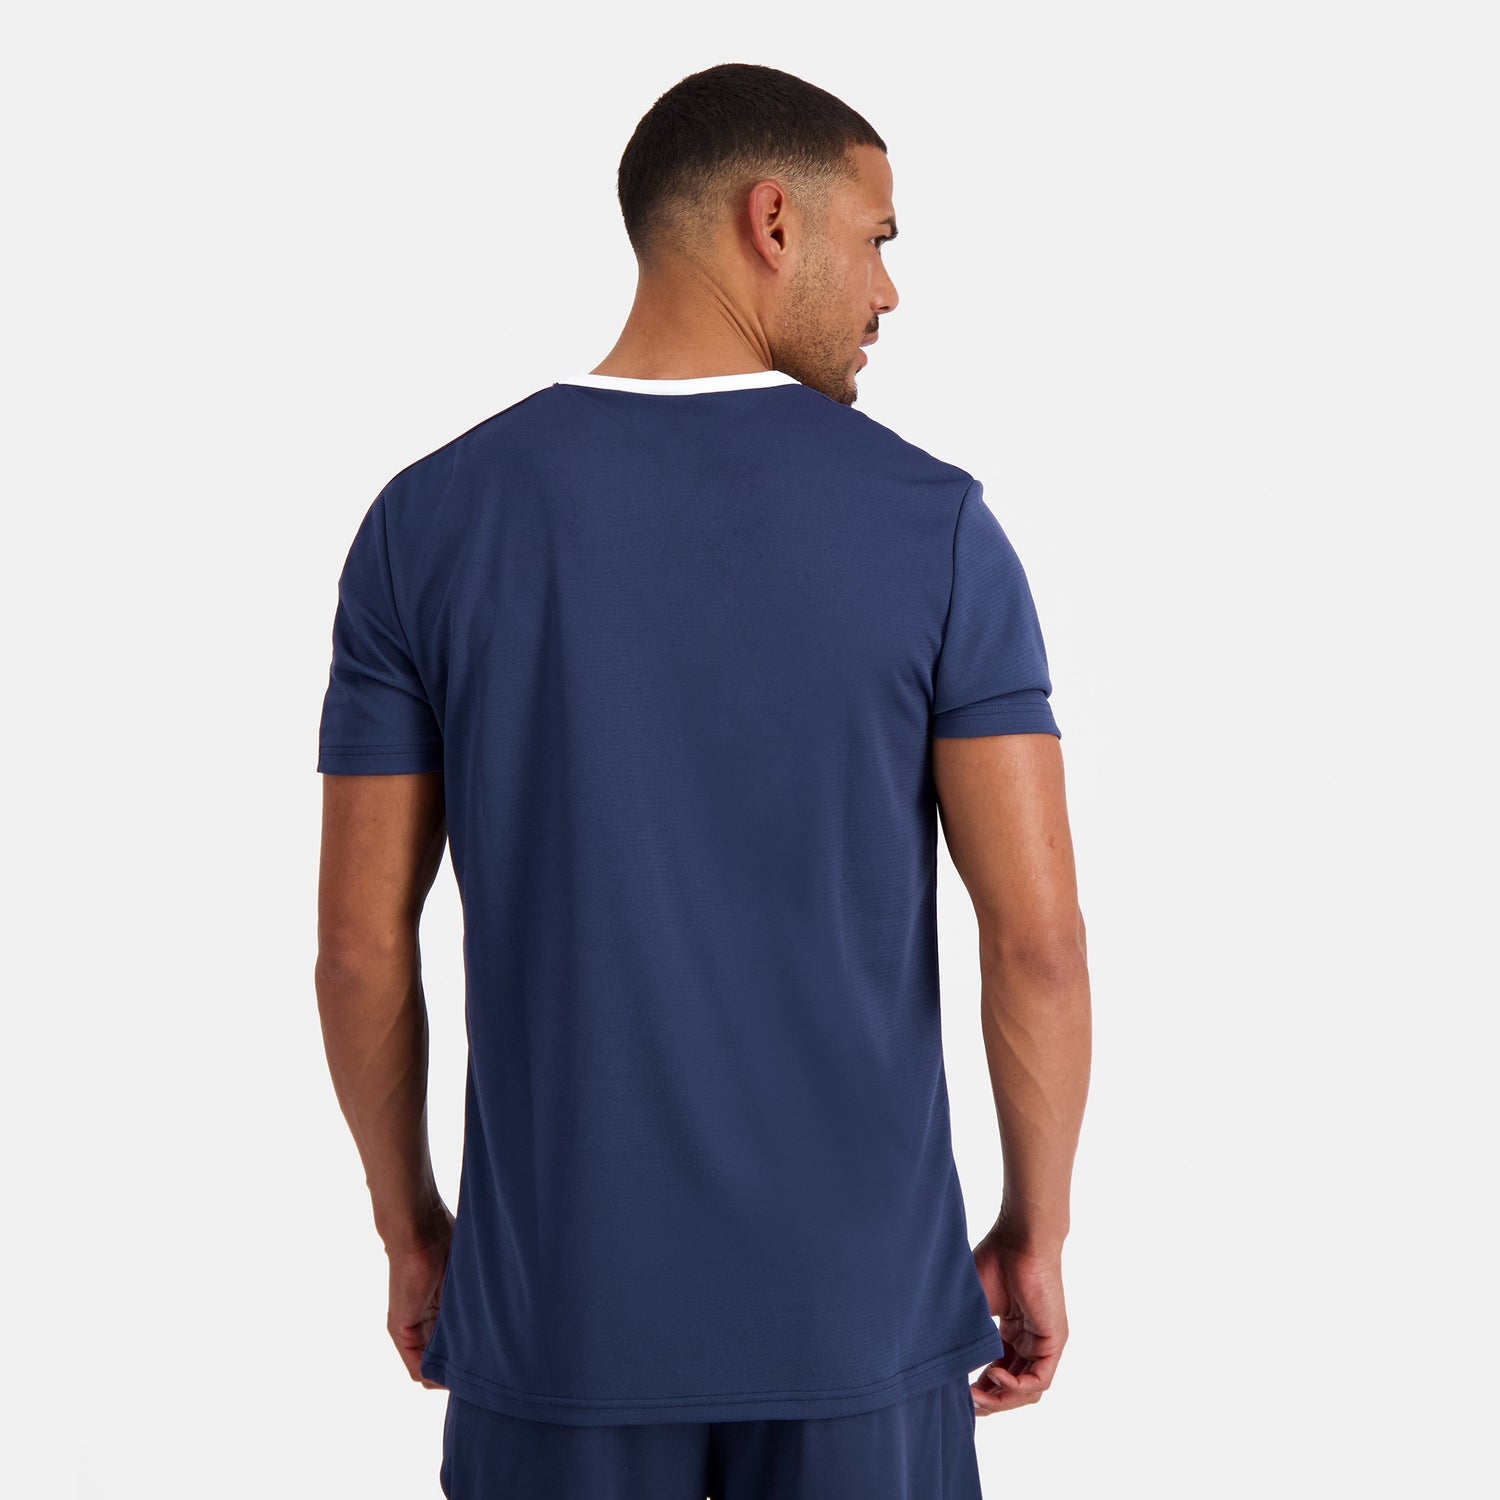 2220020-N°1 TRAINING Tee SS M dress blues | T-shirt Homme